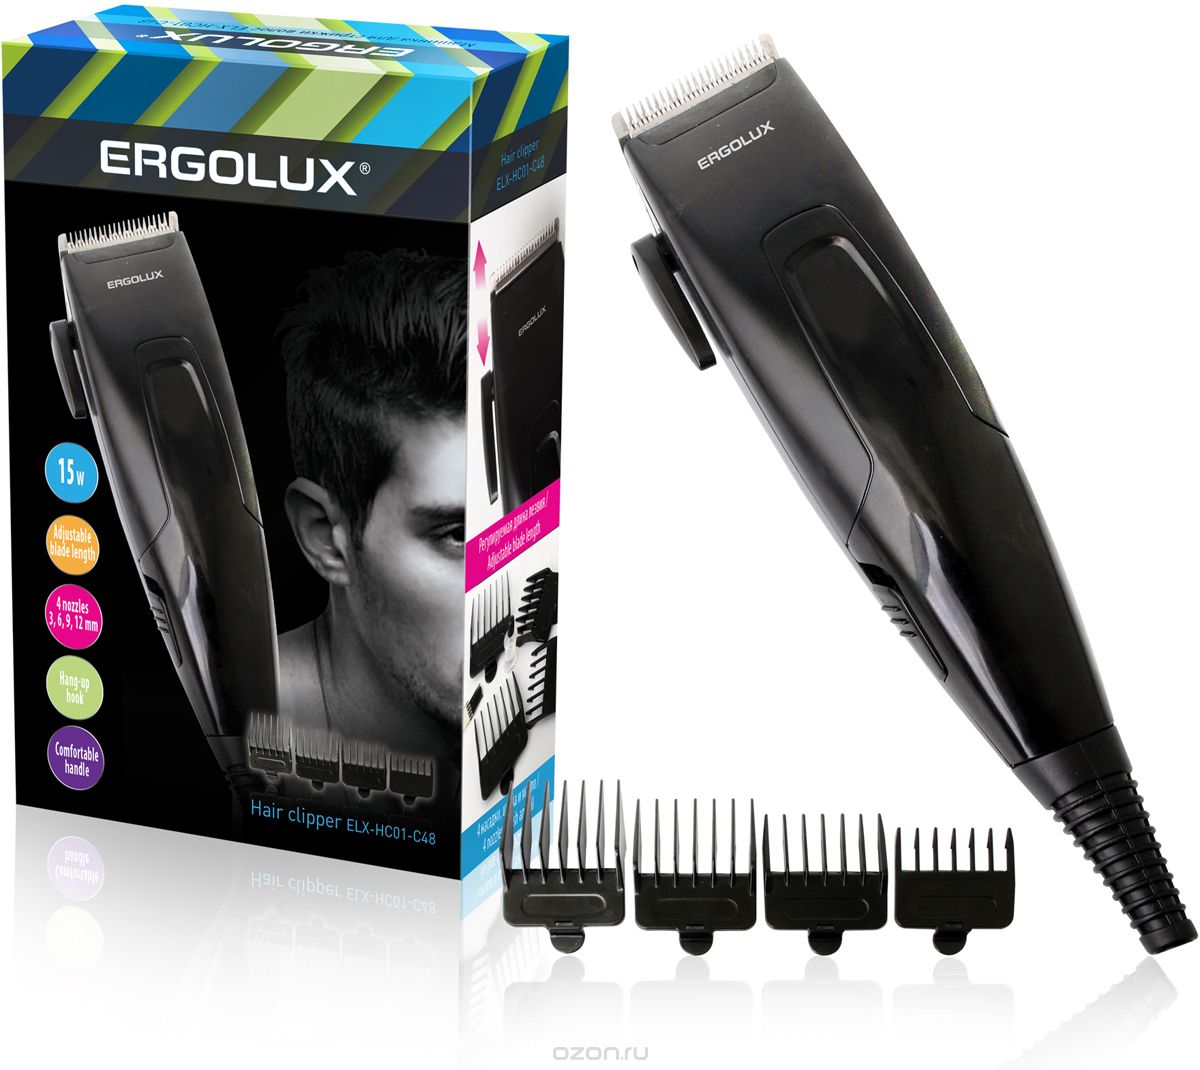    Ergolux ELX-HC01-C48, Black